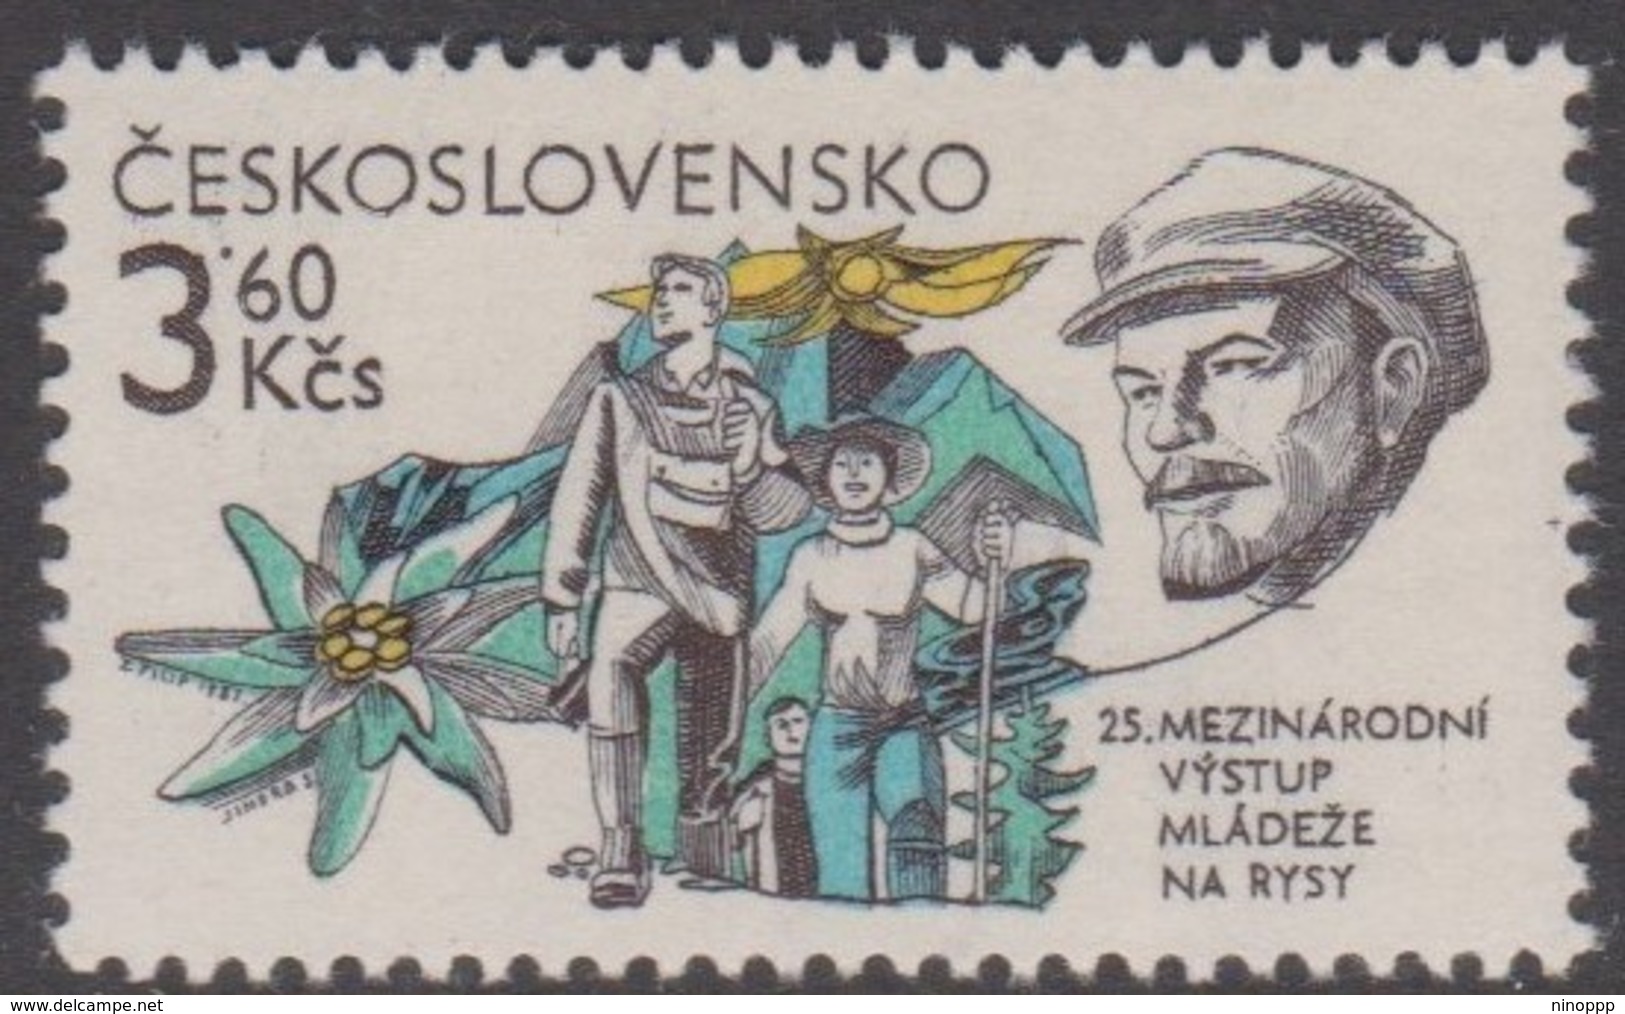 Czechoslovakia Scott 2372 1981 Anniversaries 3.60K Mountain Climbing, Mint Never Hinged - Unused Stamps